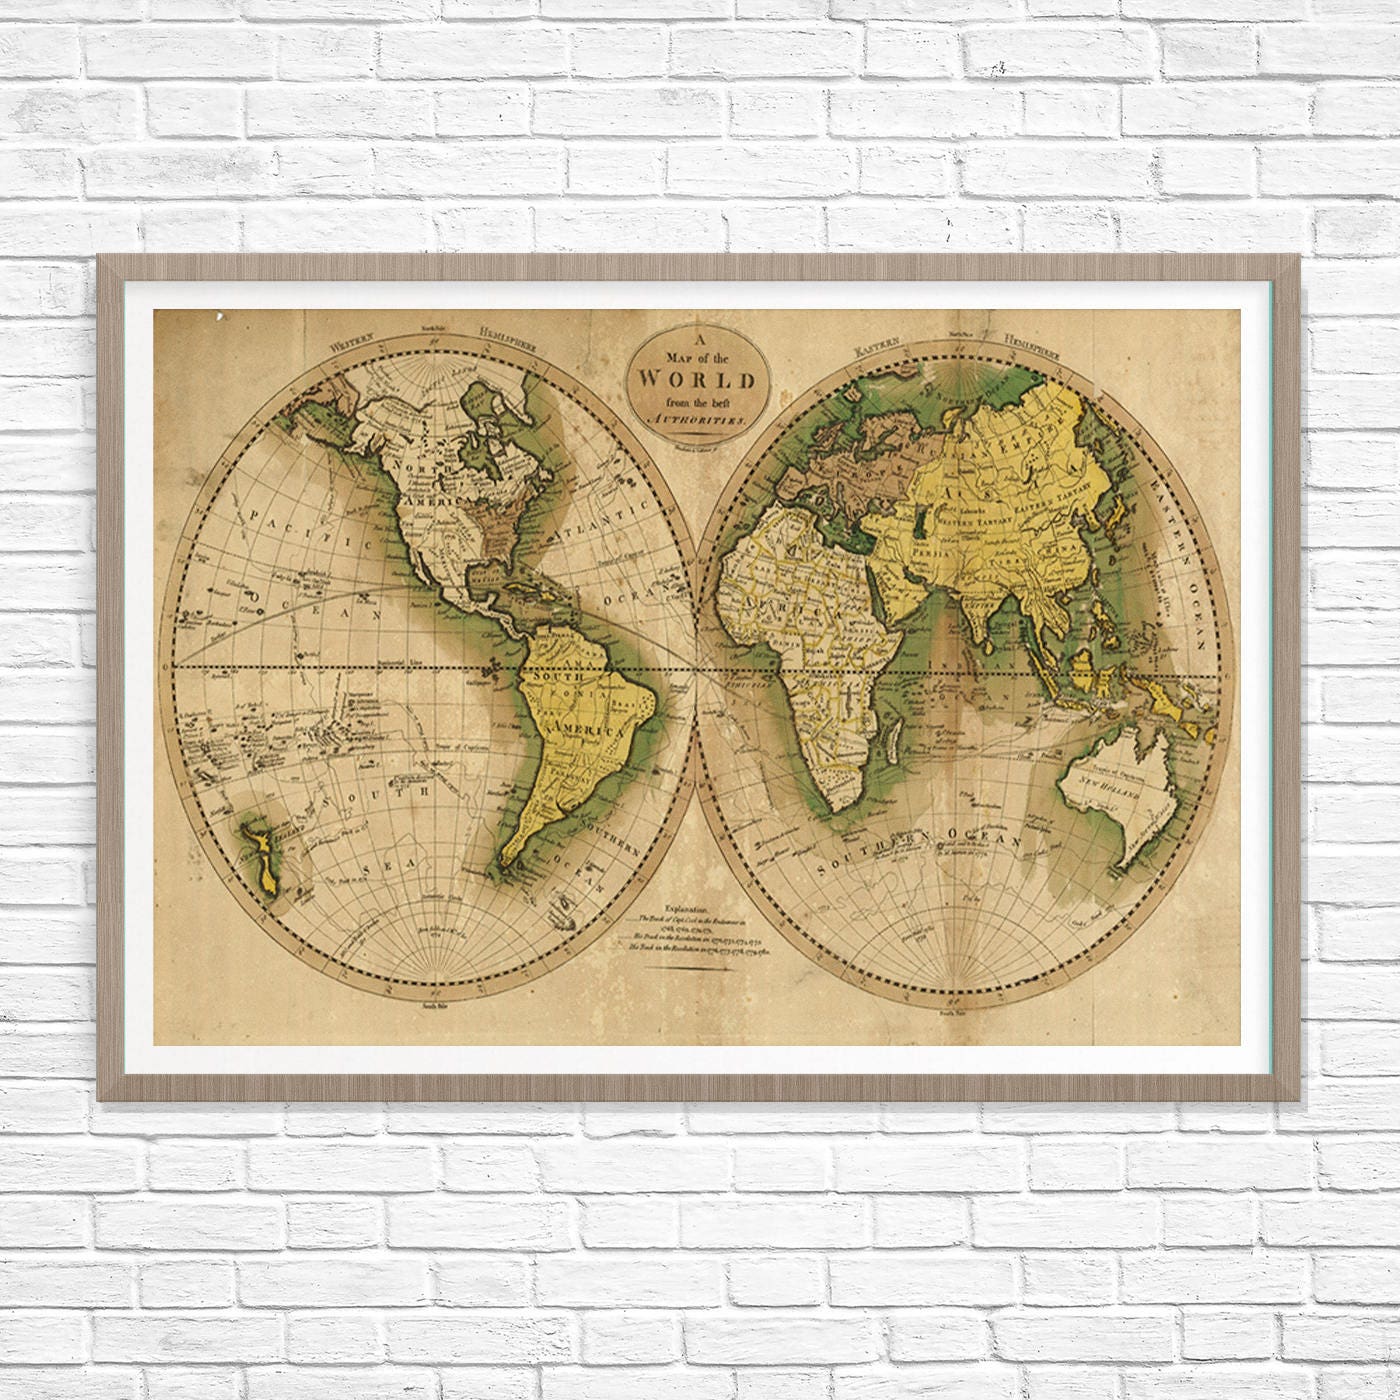 interview klep Wardianzaak Vintage wereldkaart oude wereldkaart 1795 historische kaart | Etsy